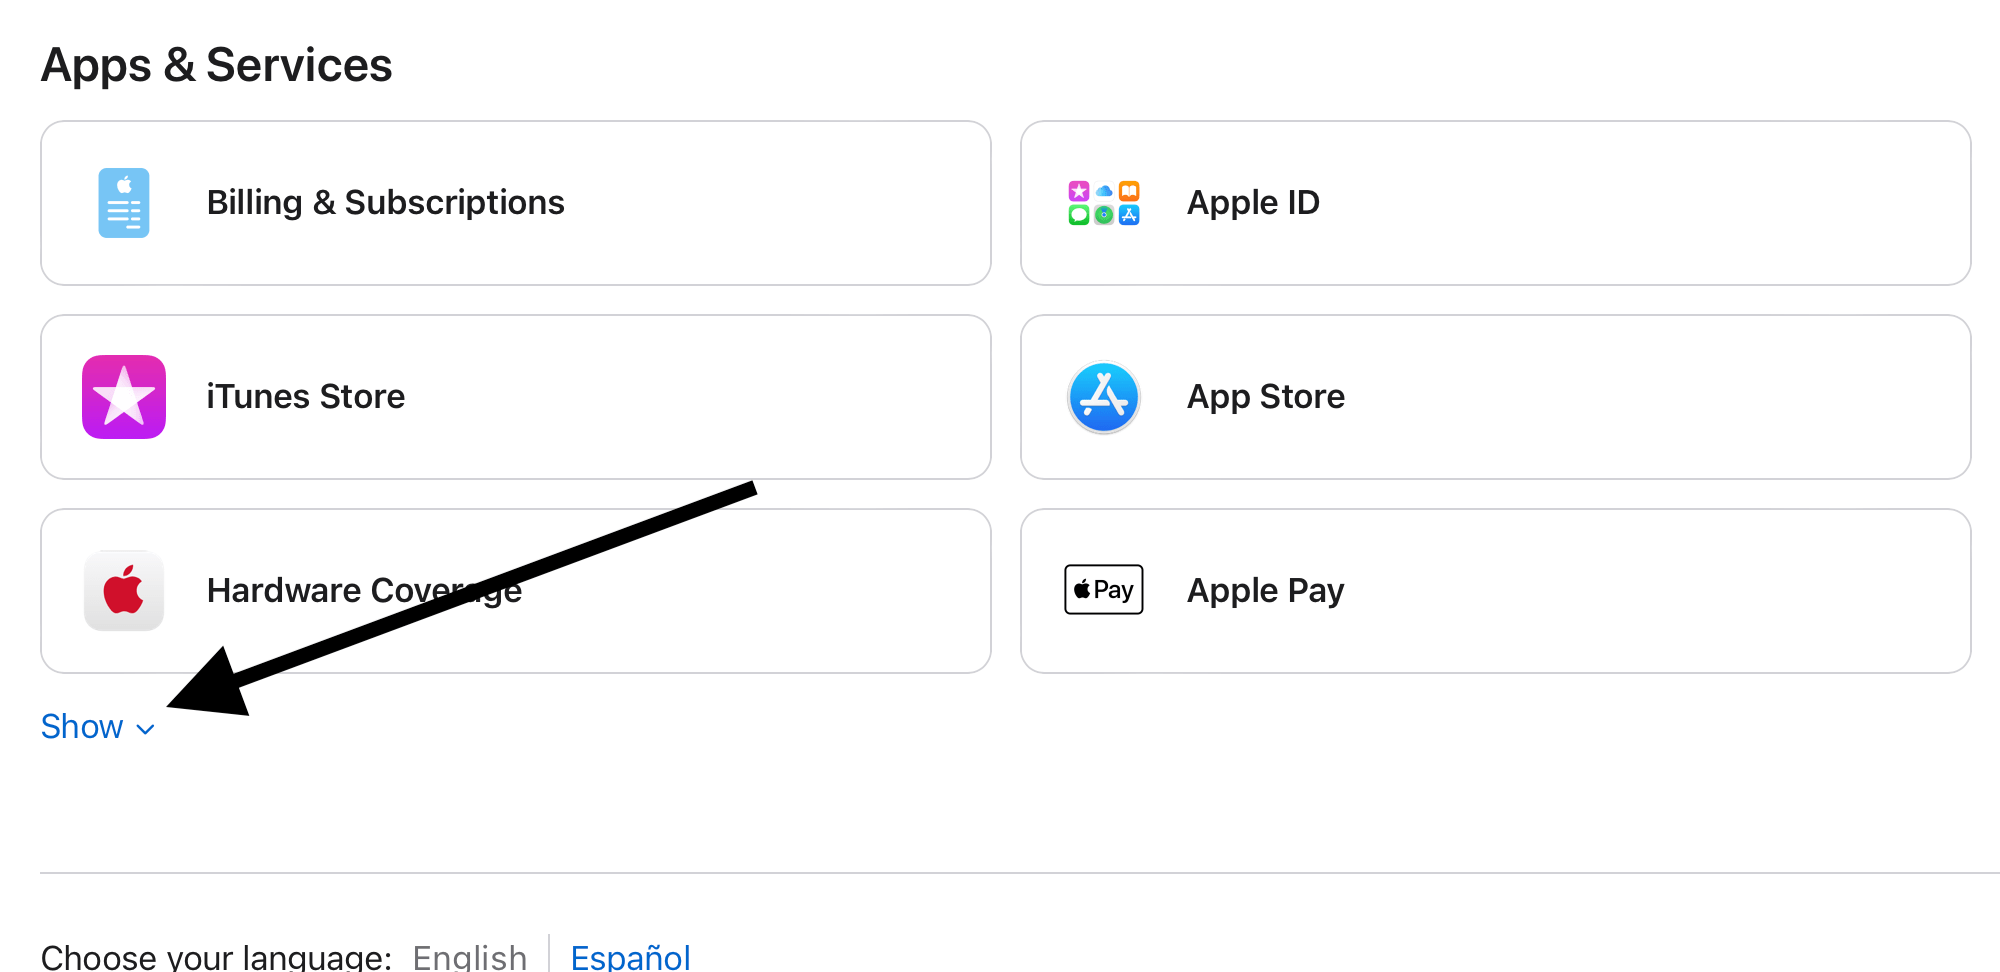 App Savings Show more option on apple.com